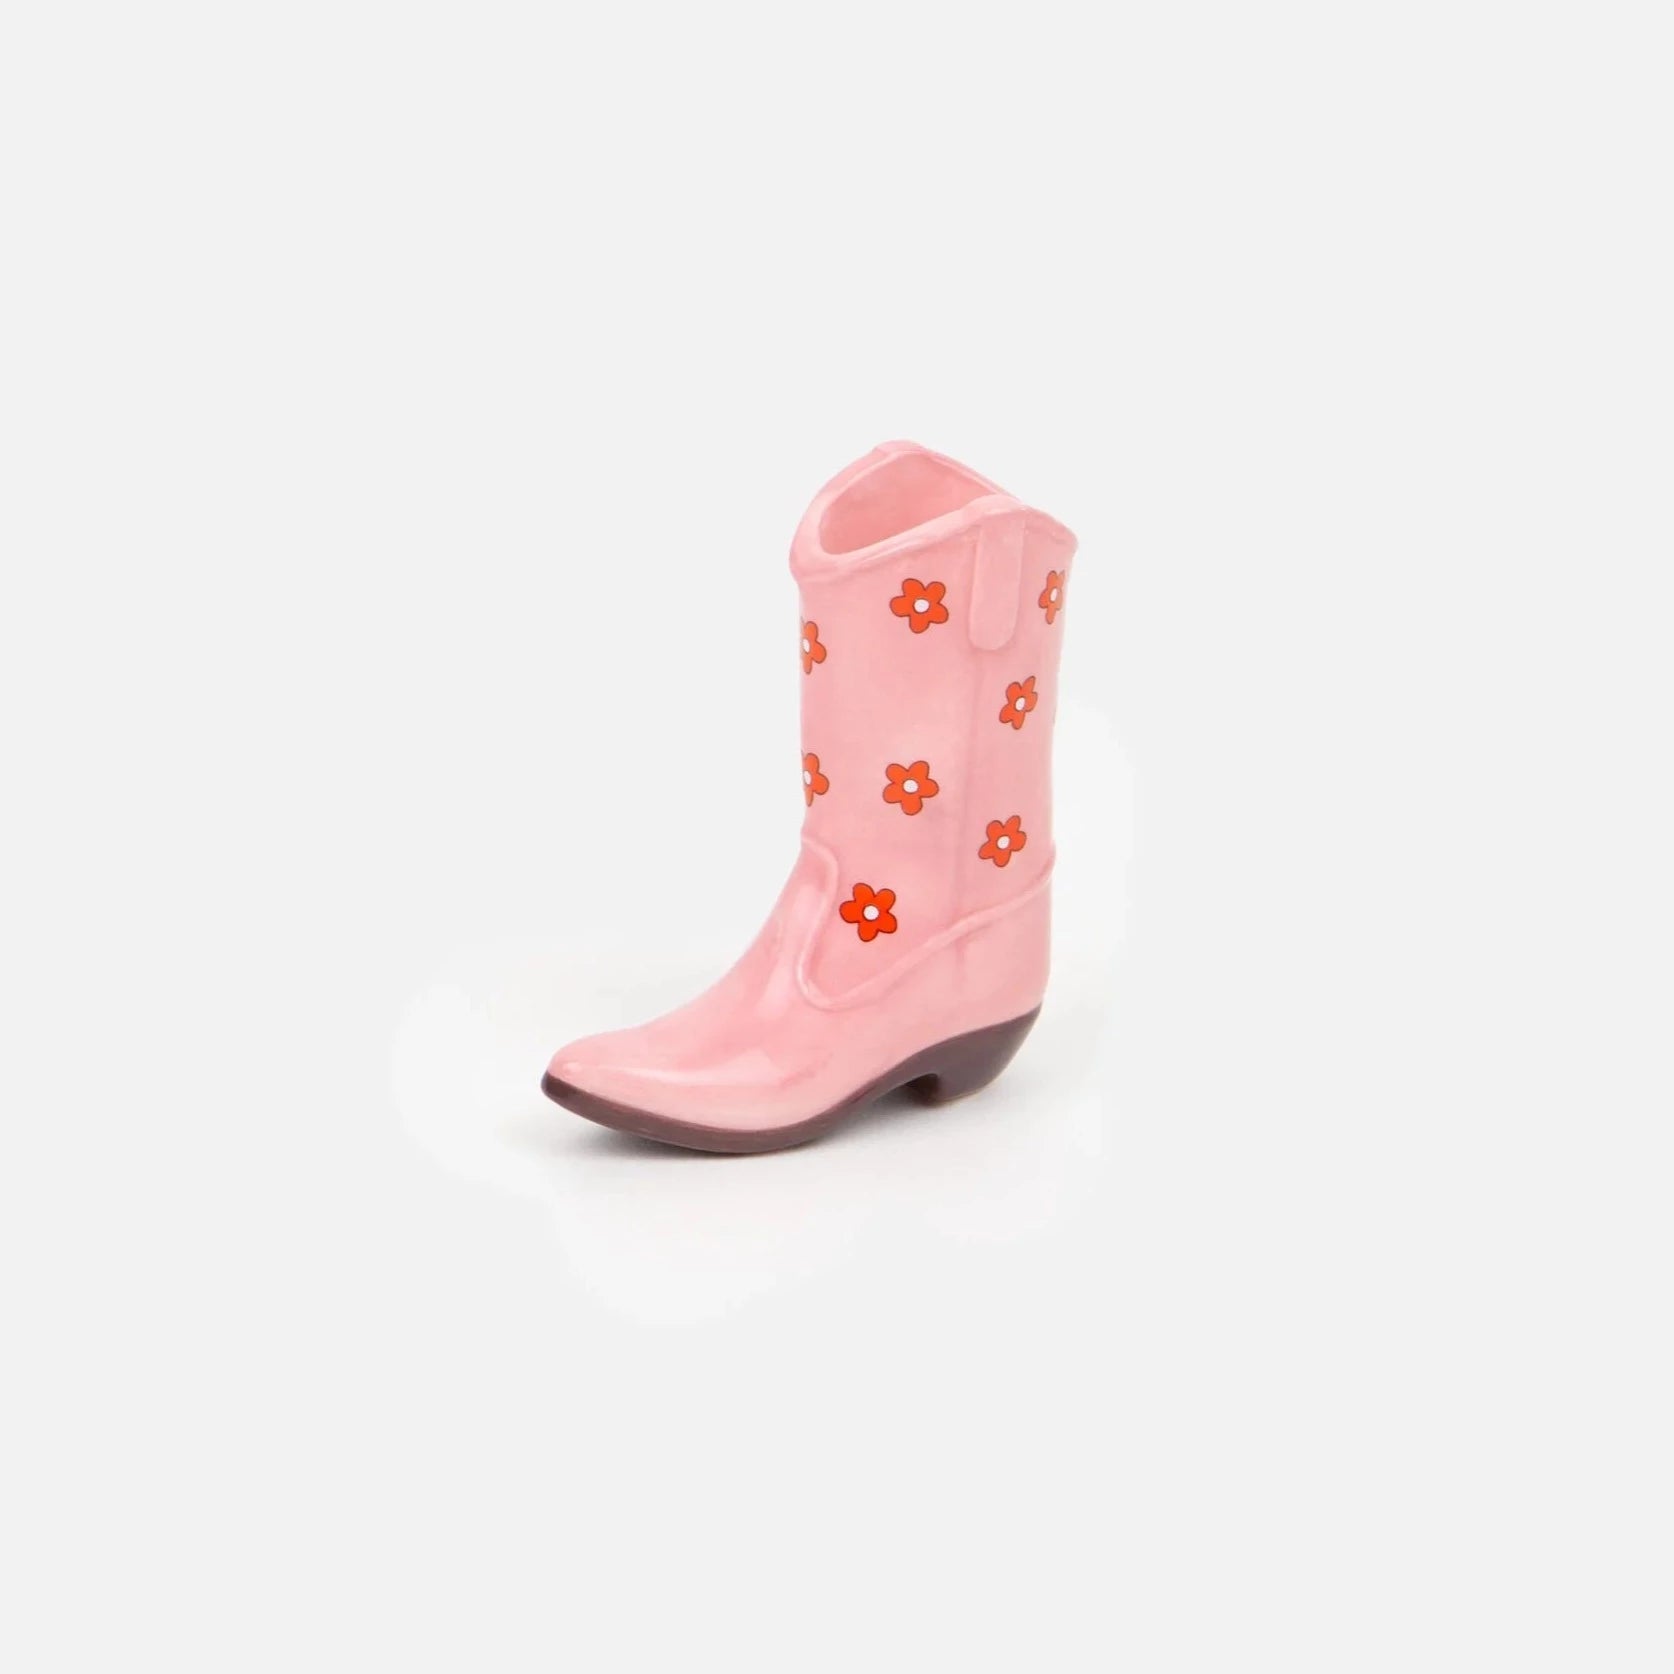 Incense holder Cowboy Boot Pink - Doiy